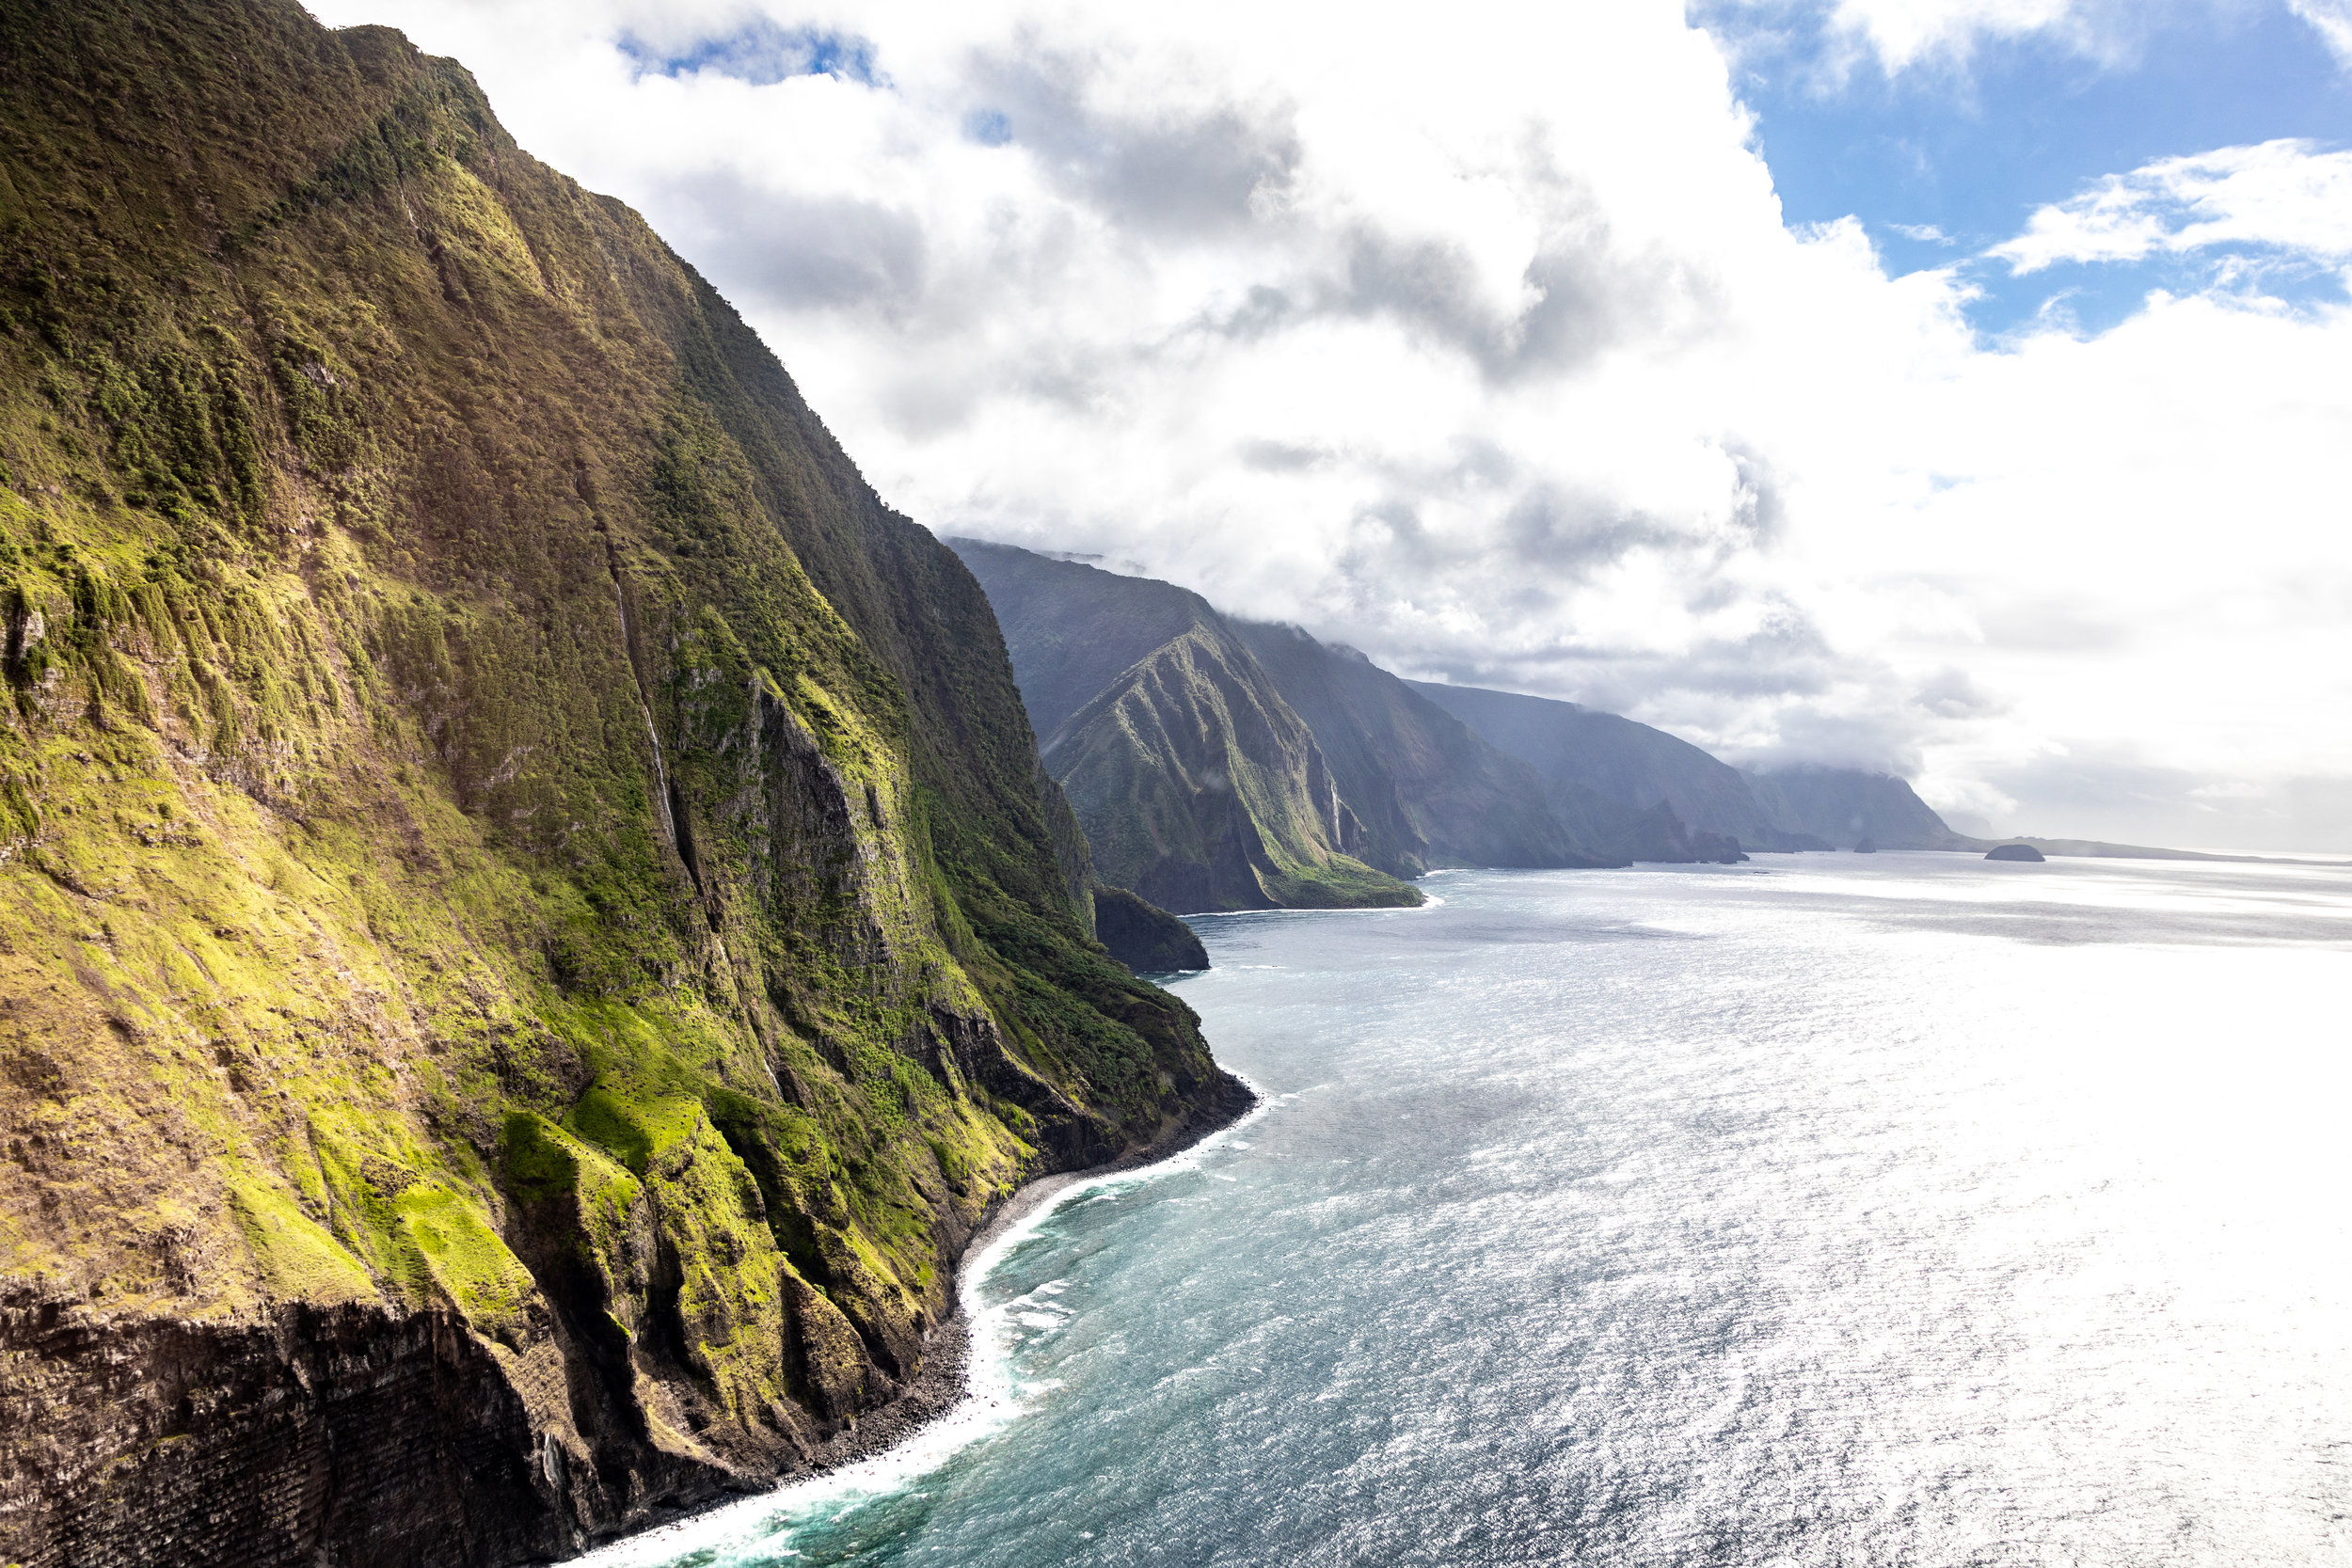  The west cliffs of Molokai, Hawaii 